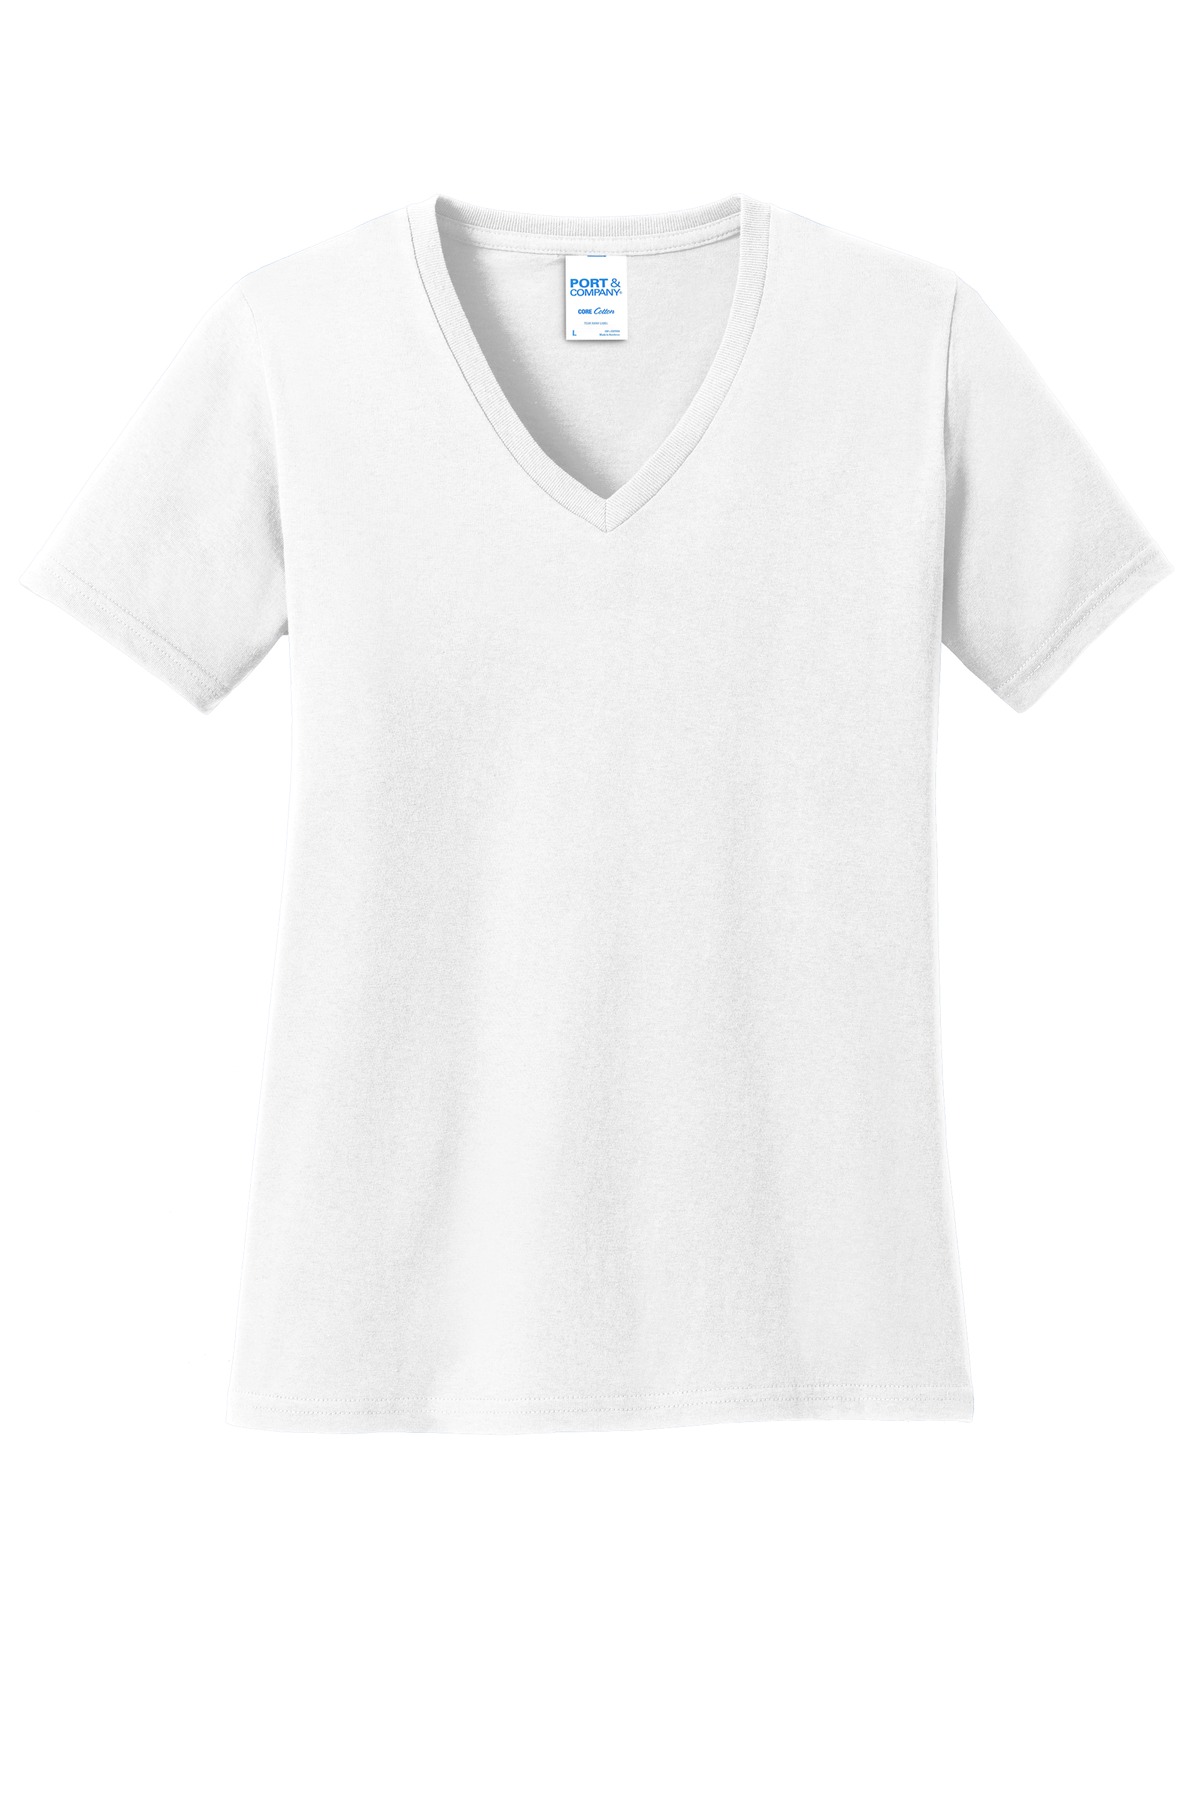 Port & Company Ladies Hospitality T-Shirts ® Ladies Core Cotton V-Neck Tee.-Port & Company